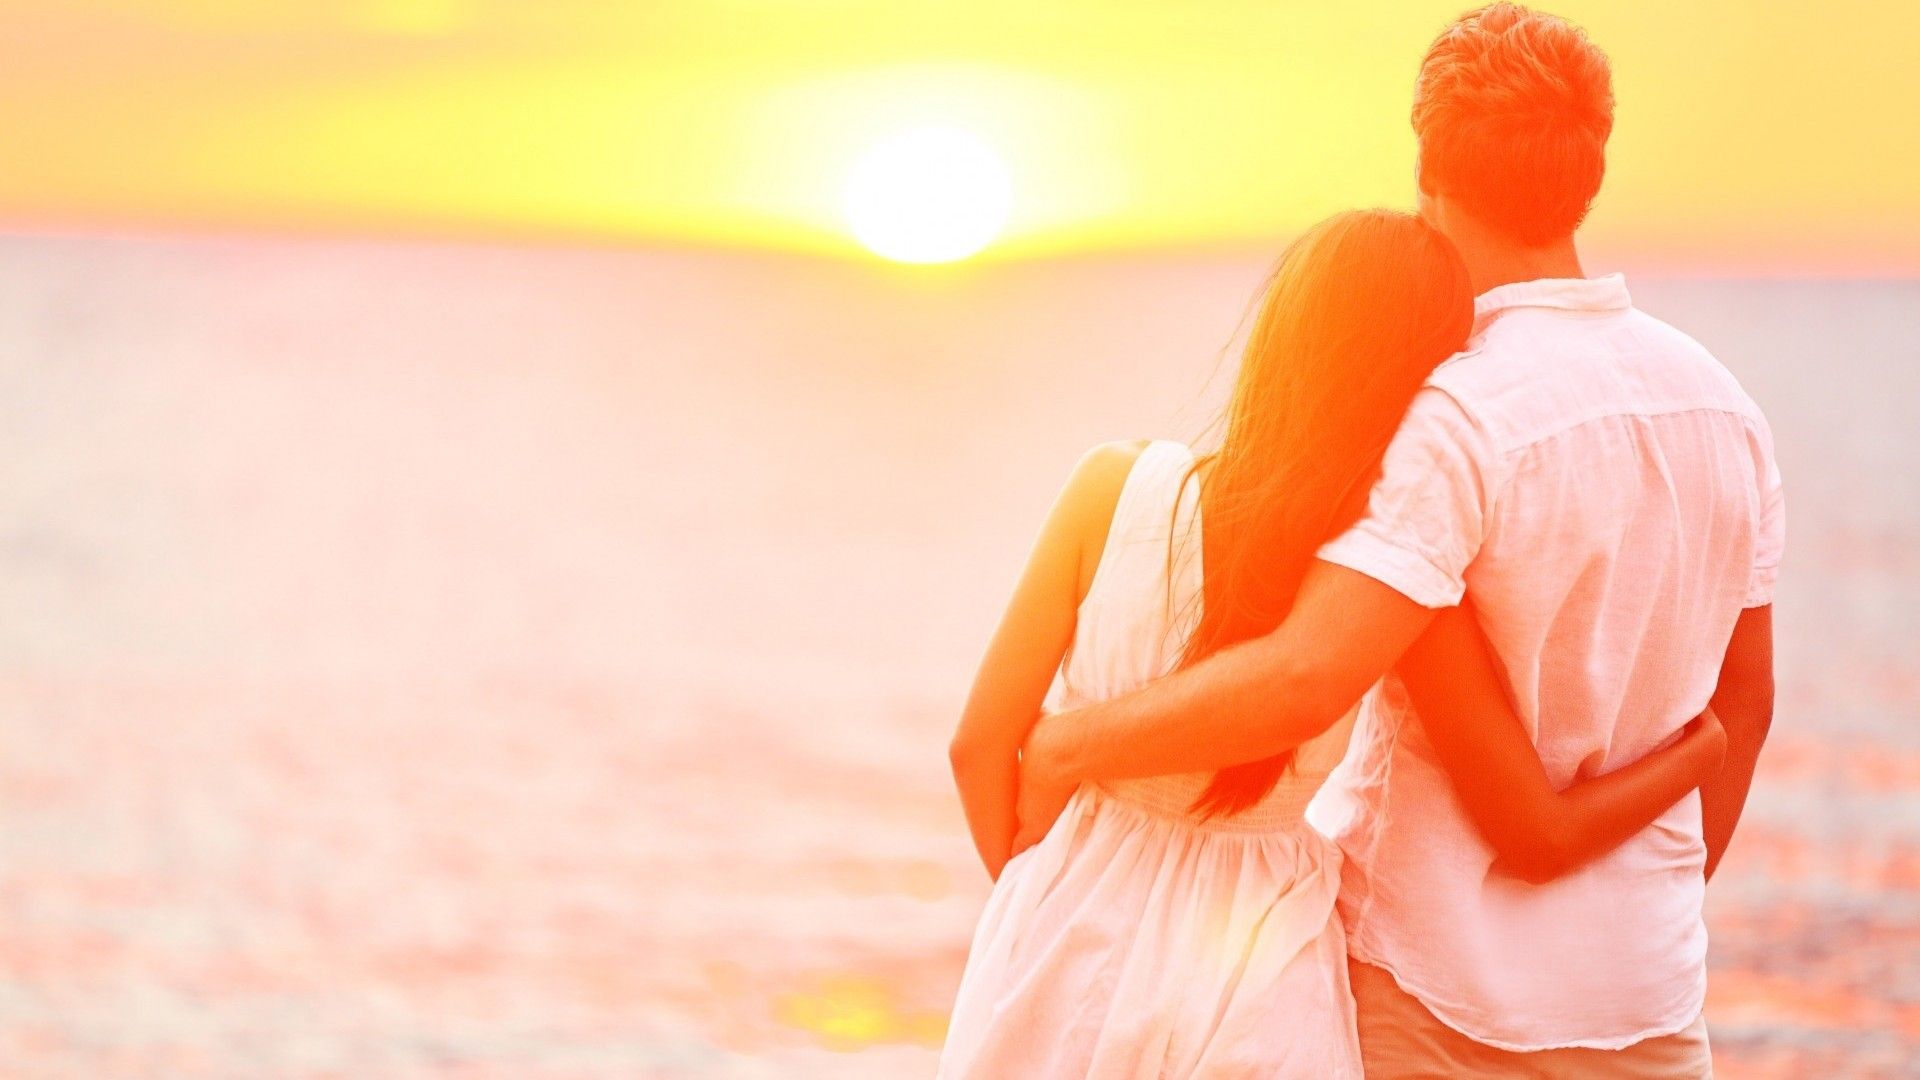 Download 1920x1080 Couple, Sunset, Beach, Romantic, Embrace, Cute Wallpaper for Widescreen